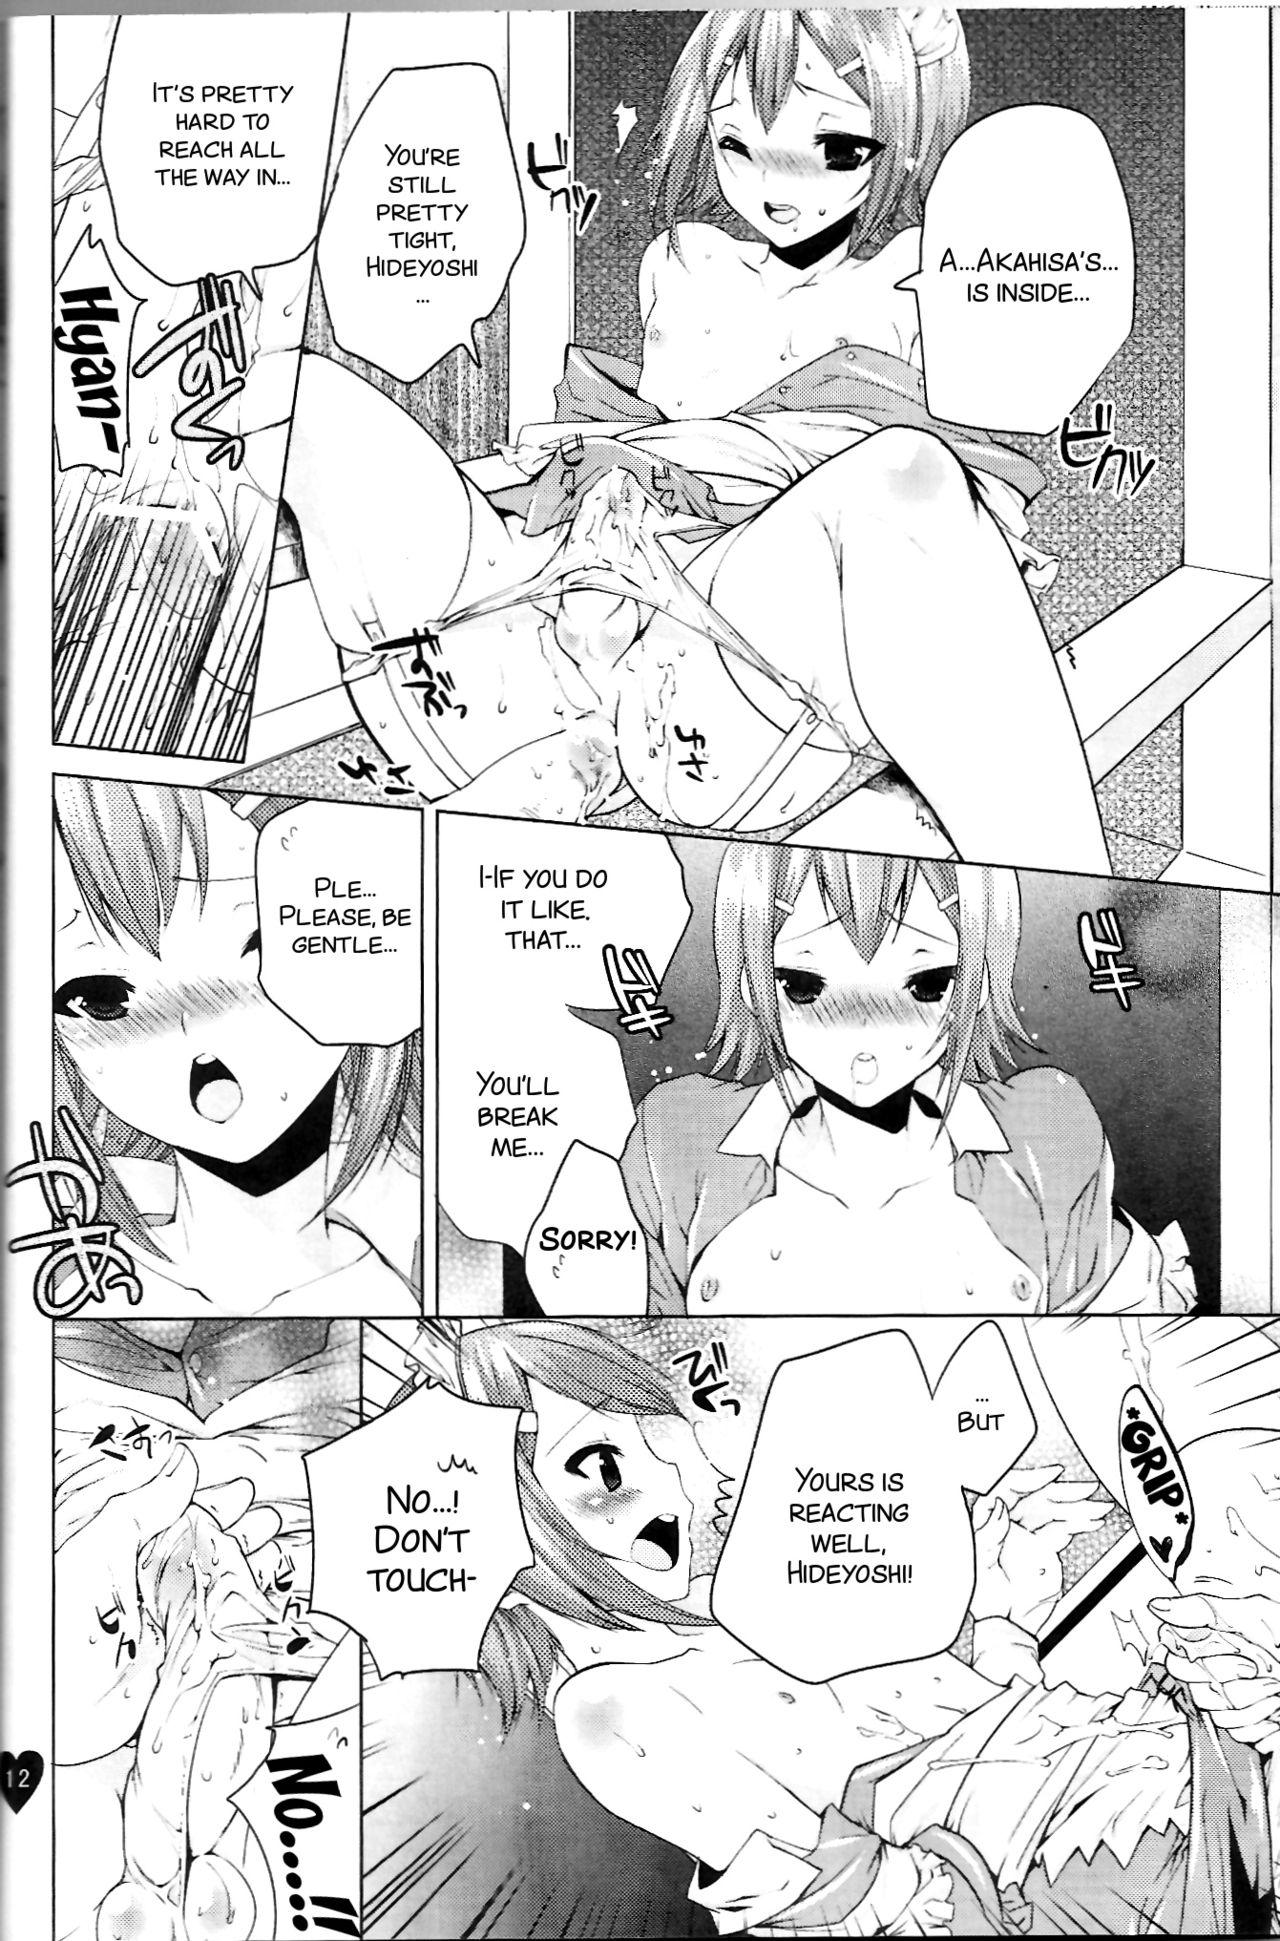 Chubby Yume no Nake e - Baka to test to shoukanjuu Rimming - Page 12